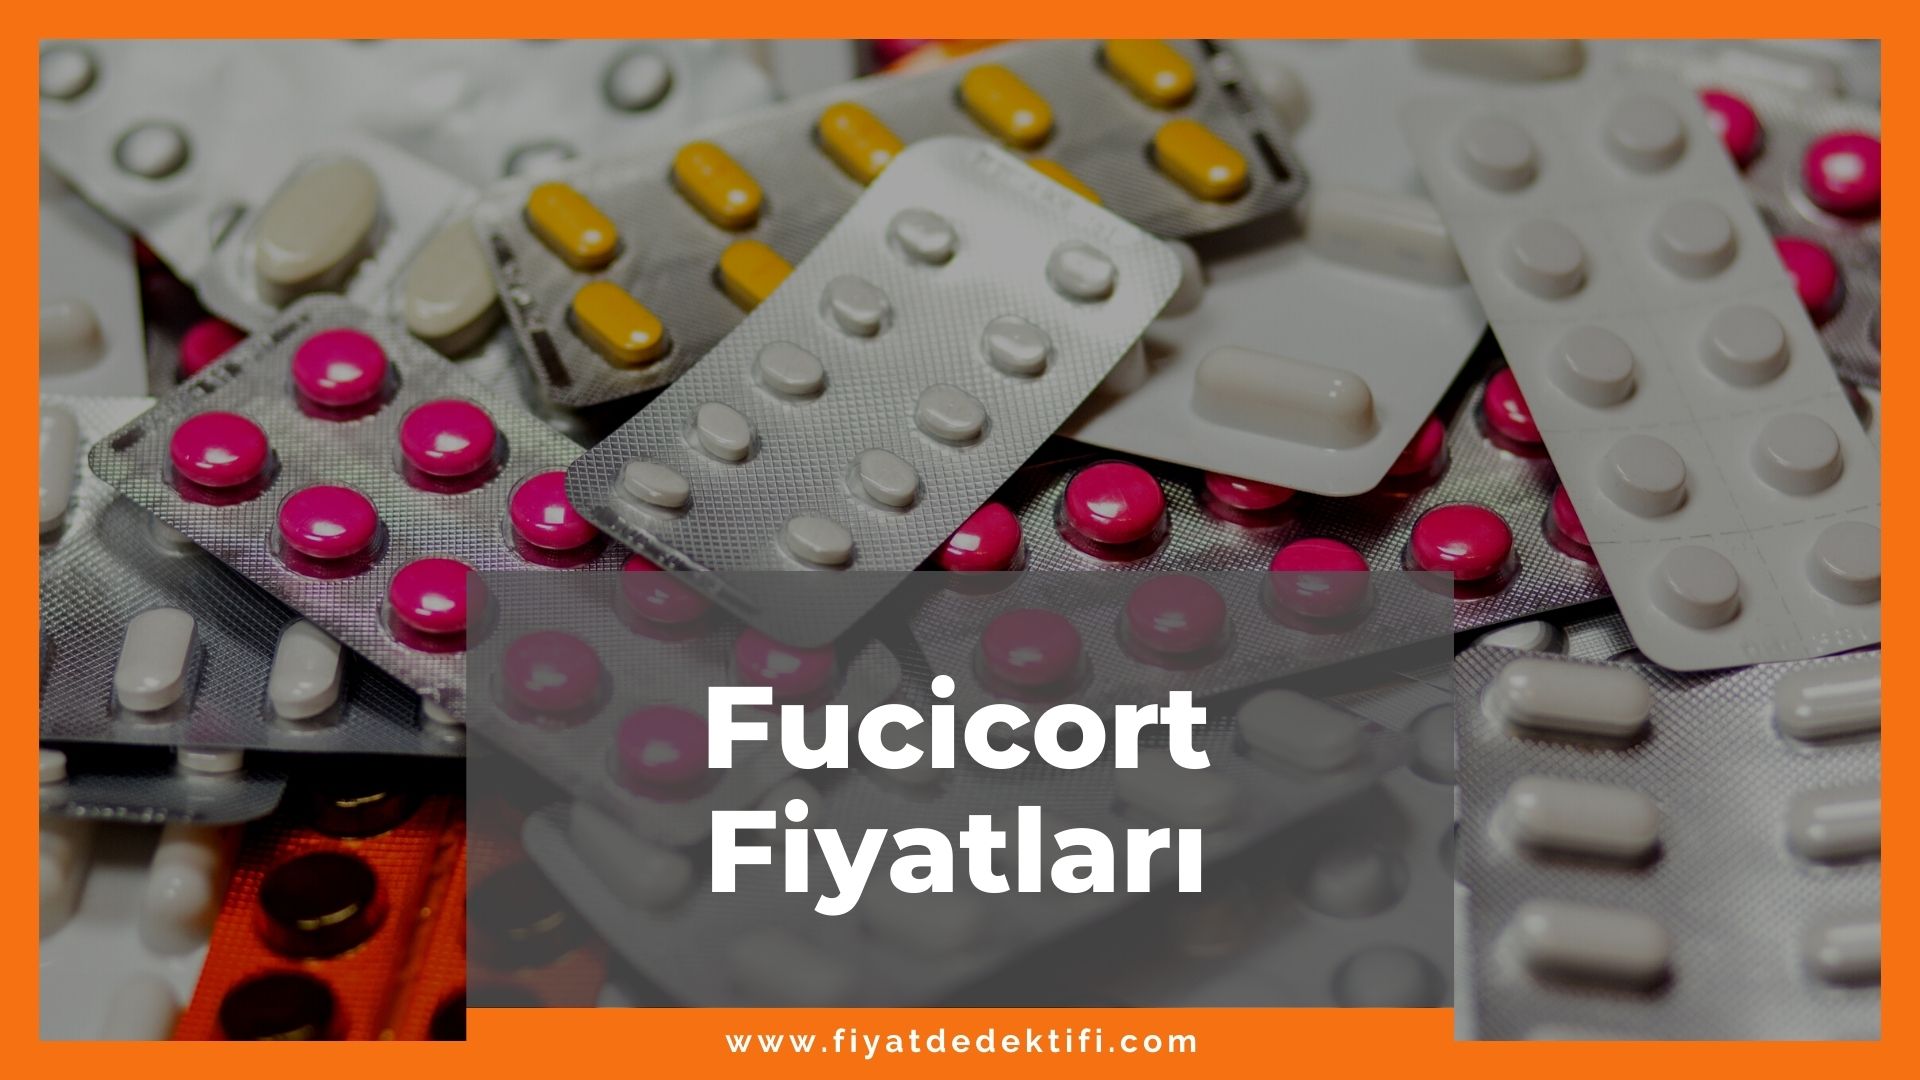 Fucicort Fiyat 2021, Fucicort Fiyatı, Fucicort Krem Fiyatı, fucicort zamlandı mı, fucicort zamlı fiyat ne kadar oldu